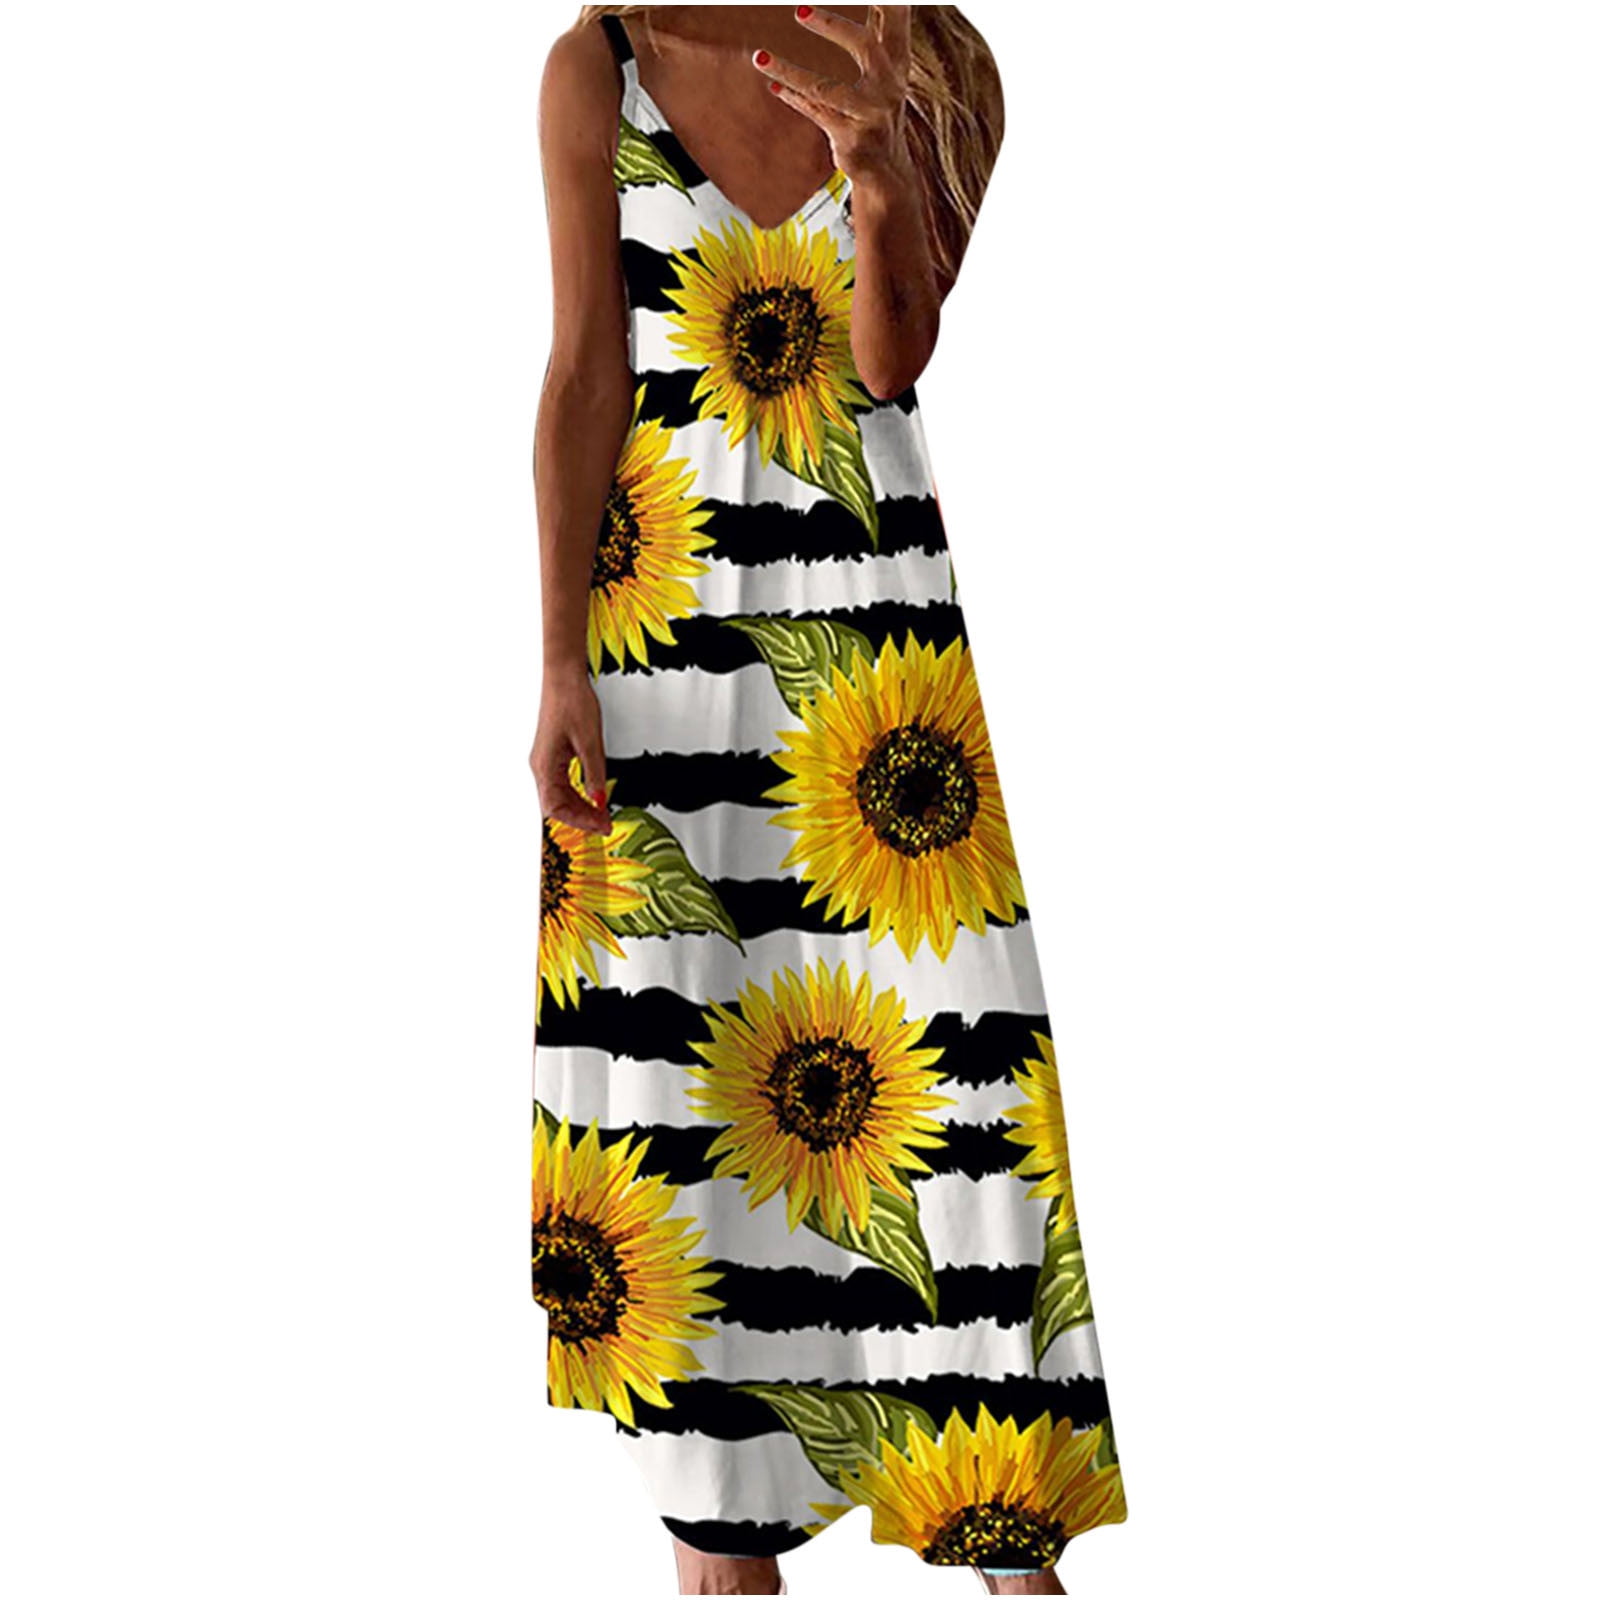 USSUMA Dresses For Women Party Casual,Women's Dresses Sunflower Print ...